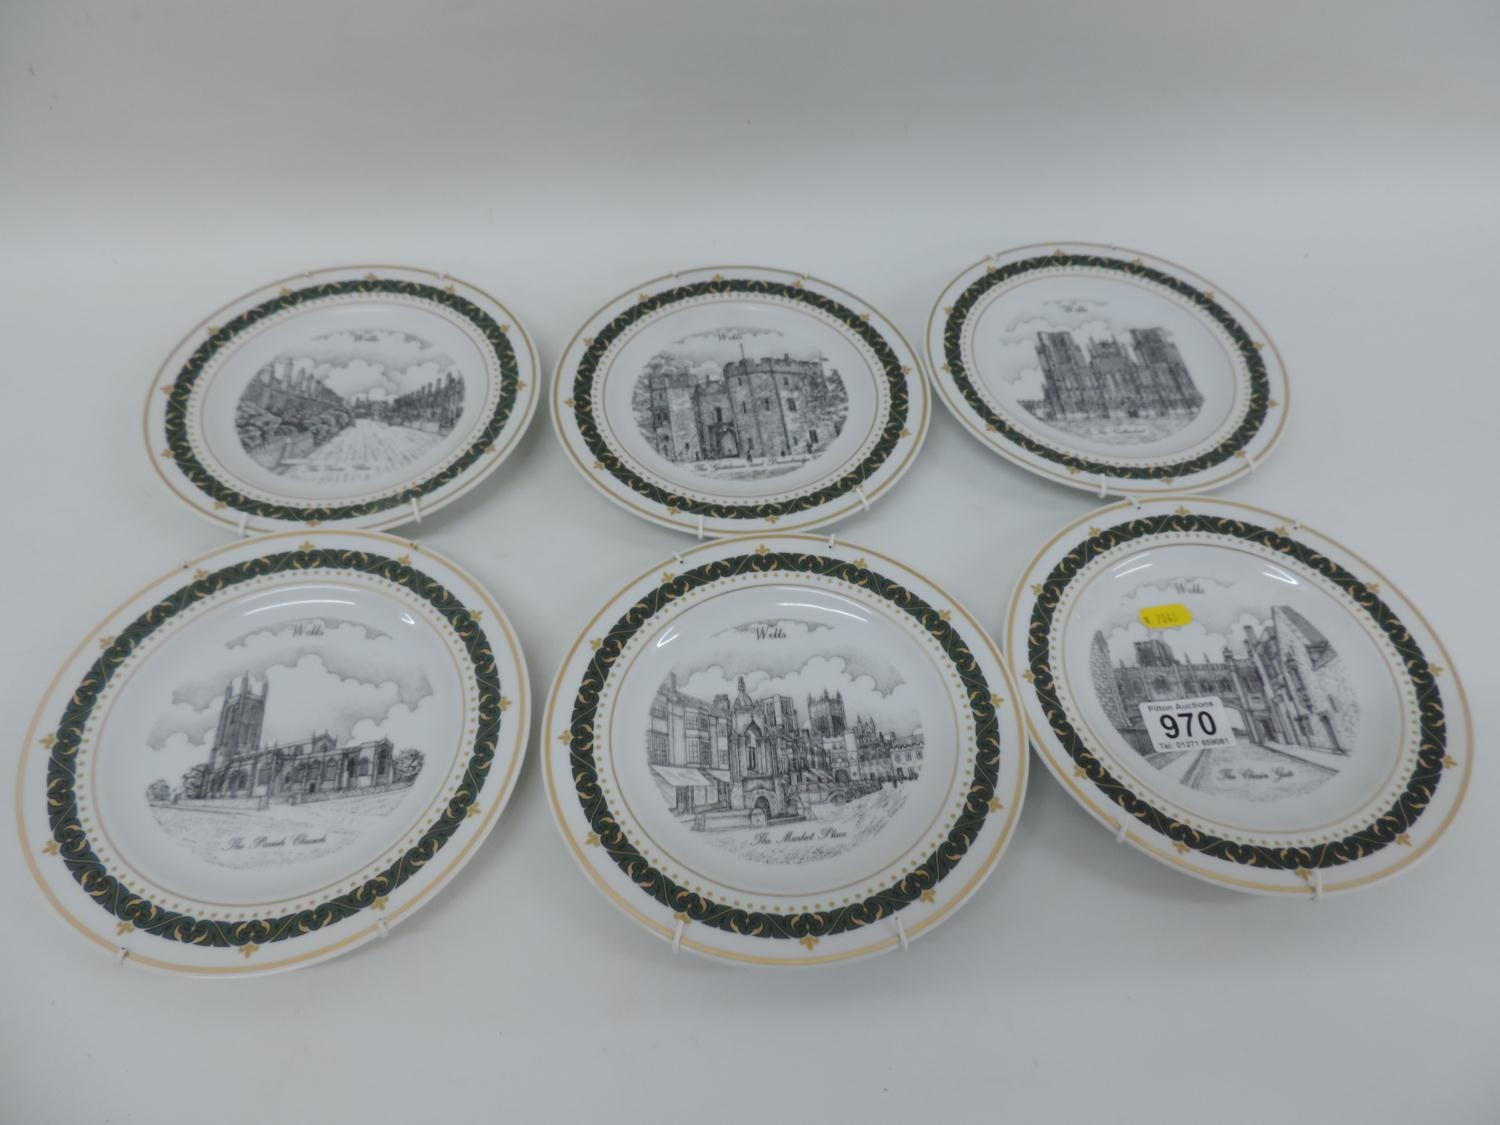 Gerald Swan collectors plates - Wells